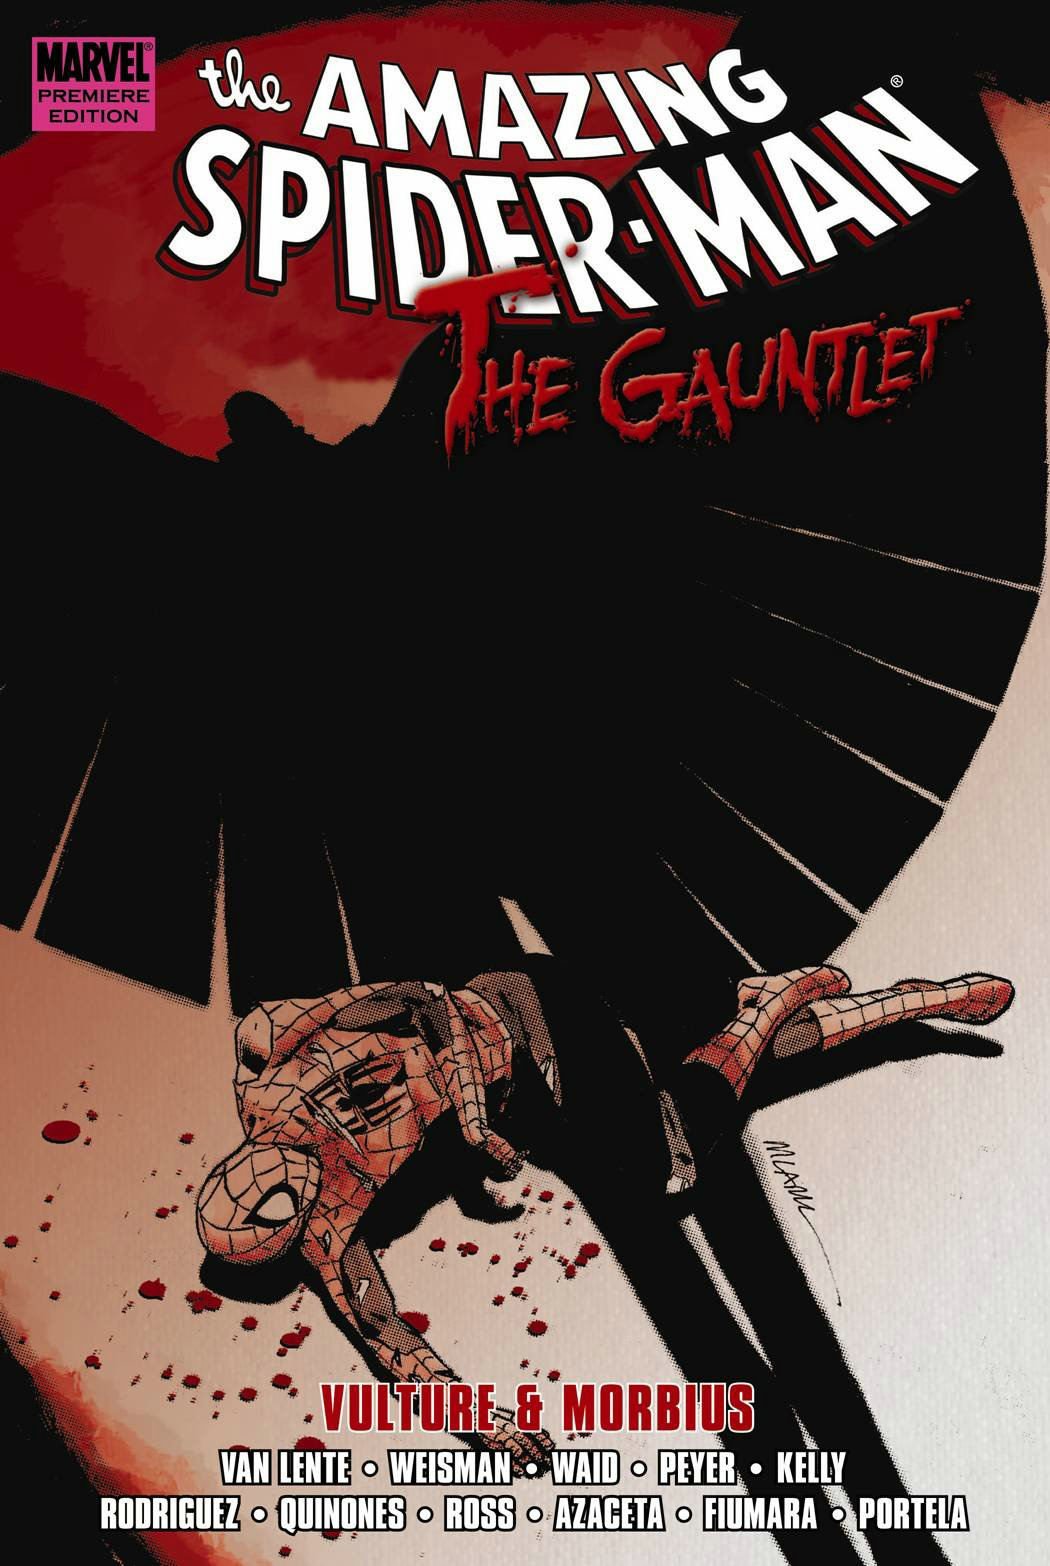 Copy of Spider-Man: The Gauntlet, Vol. 3 - Vulture & Morbius HARDCOVER